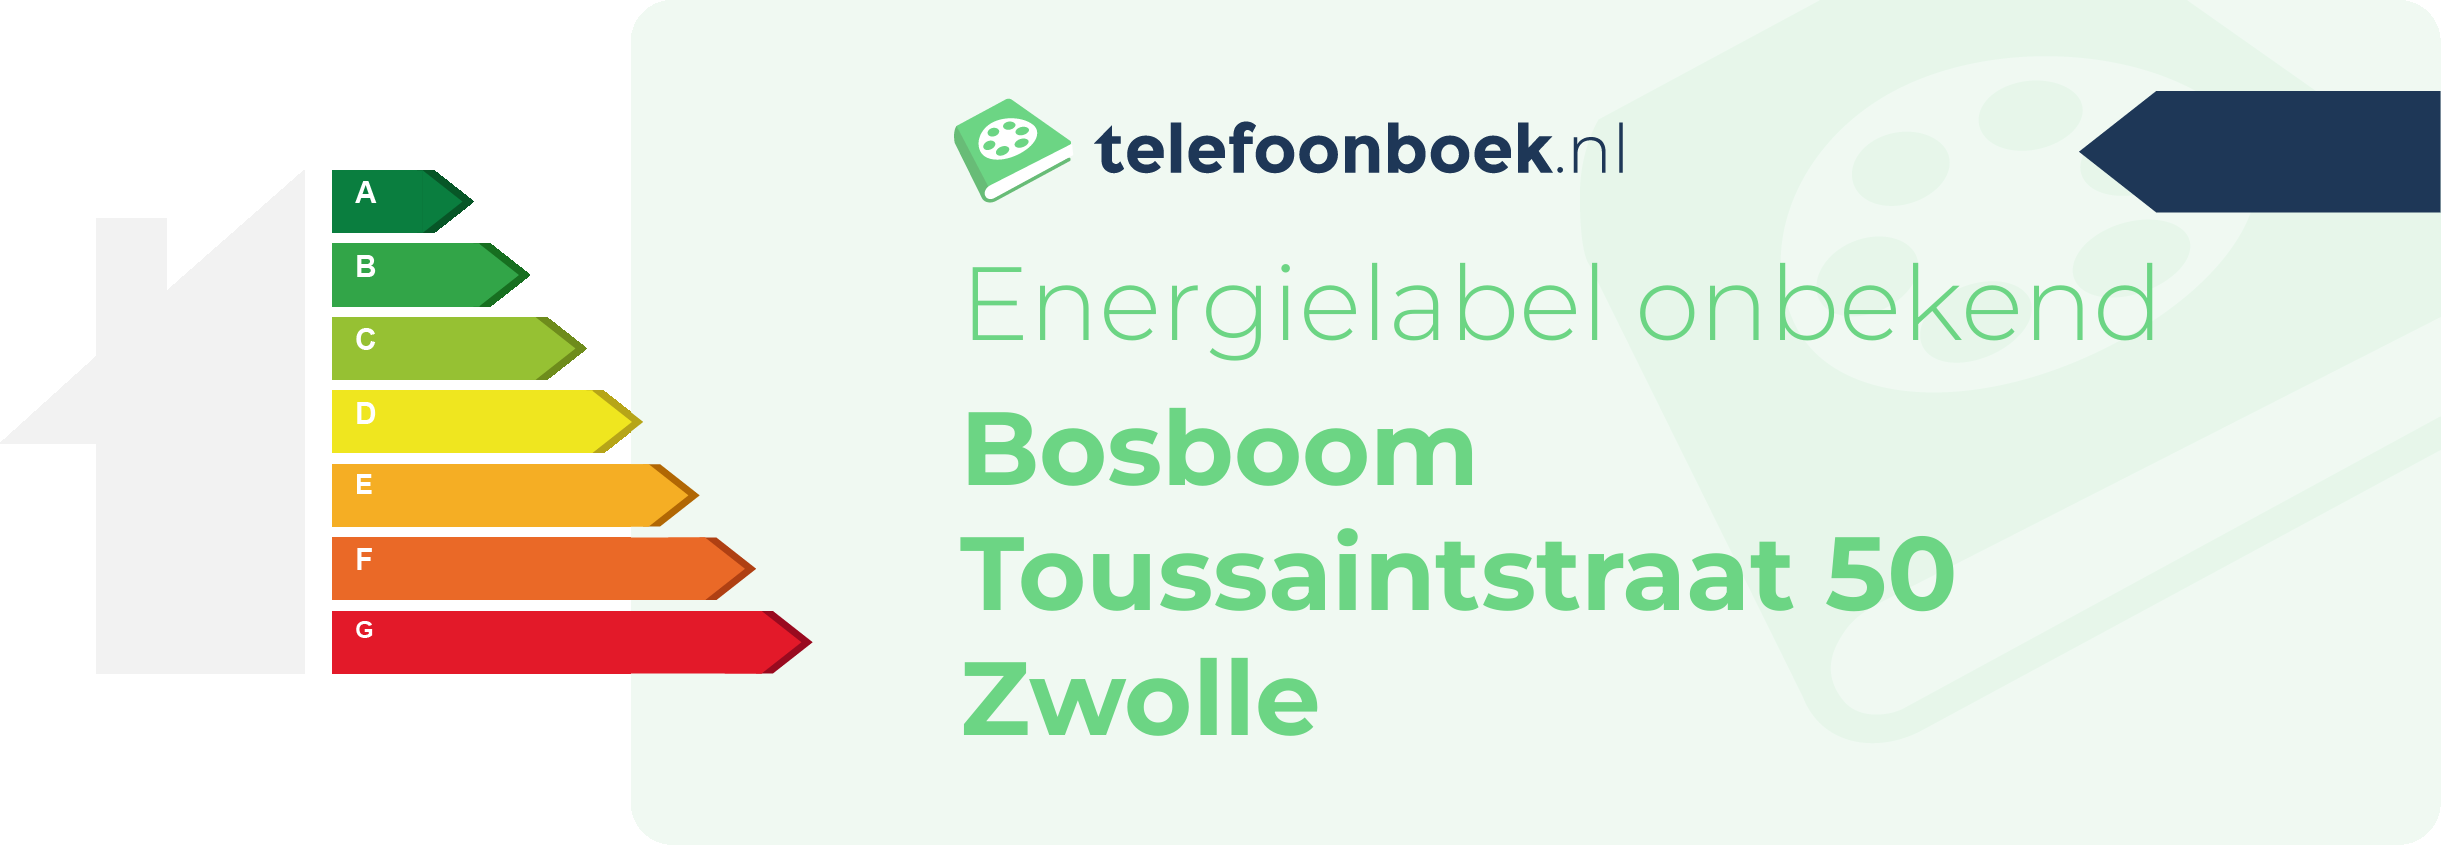 Energielabel Bosboom Toussaintstraat 50 Zwolle